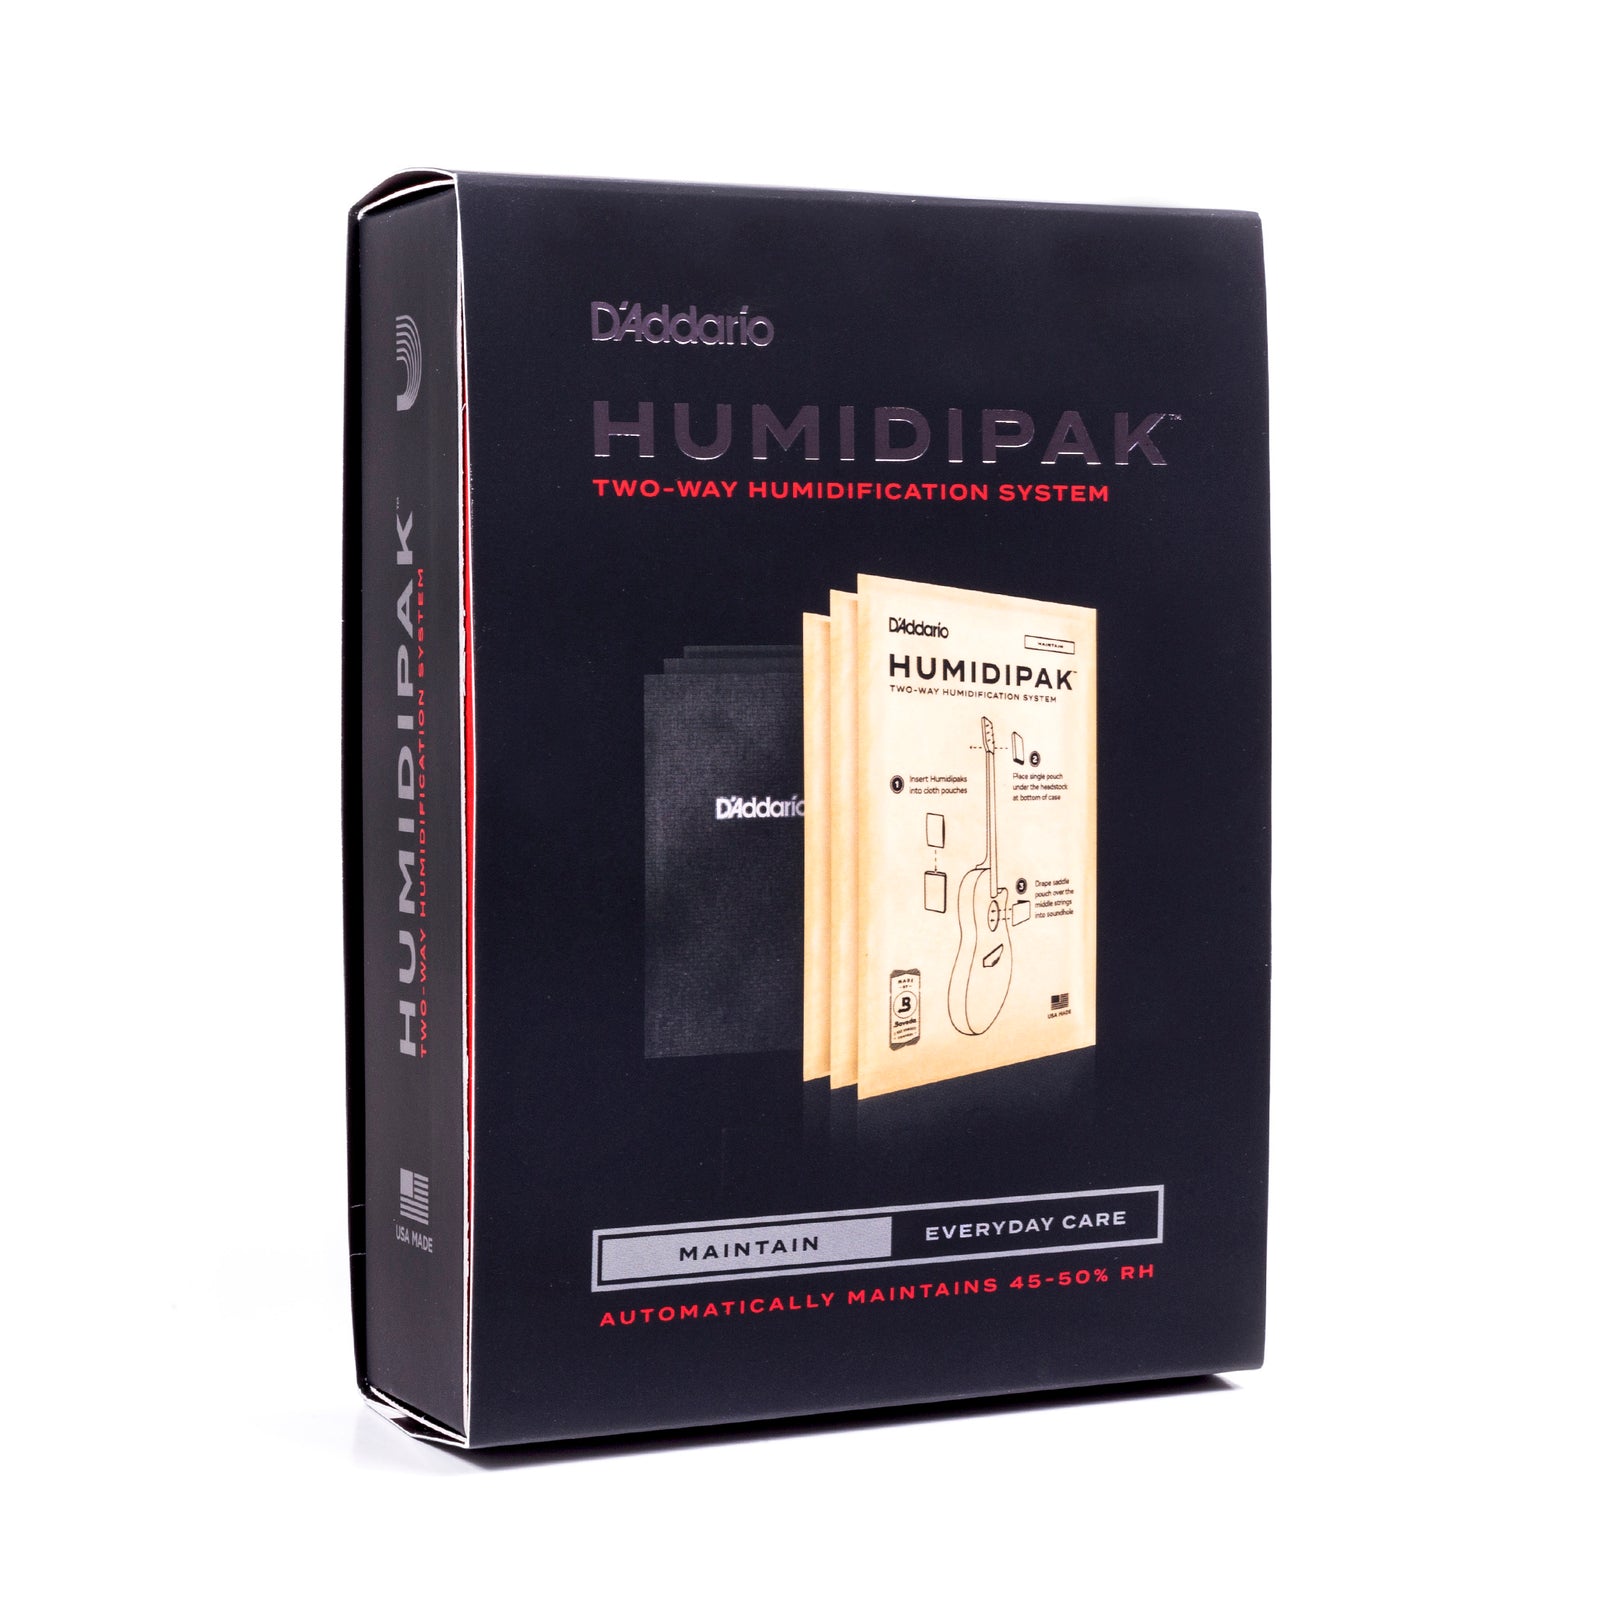 Music Nomad MN306 Guitar Humidifier & Humidity-Temperature Monitor Pak 